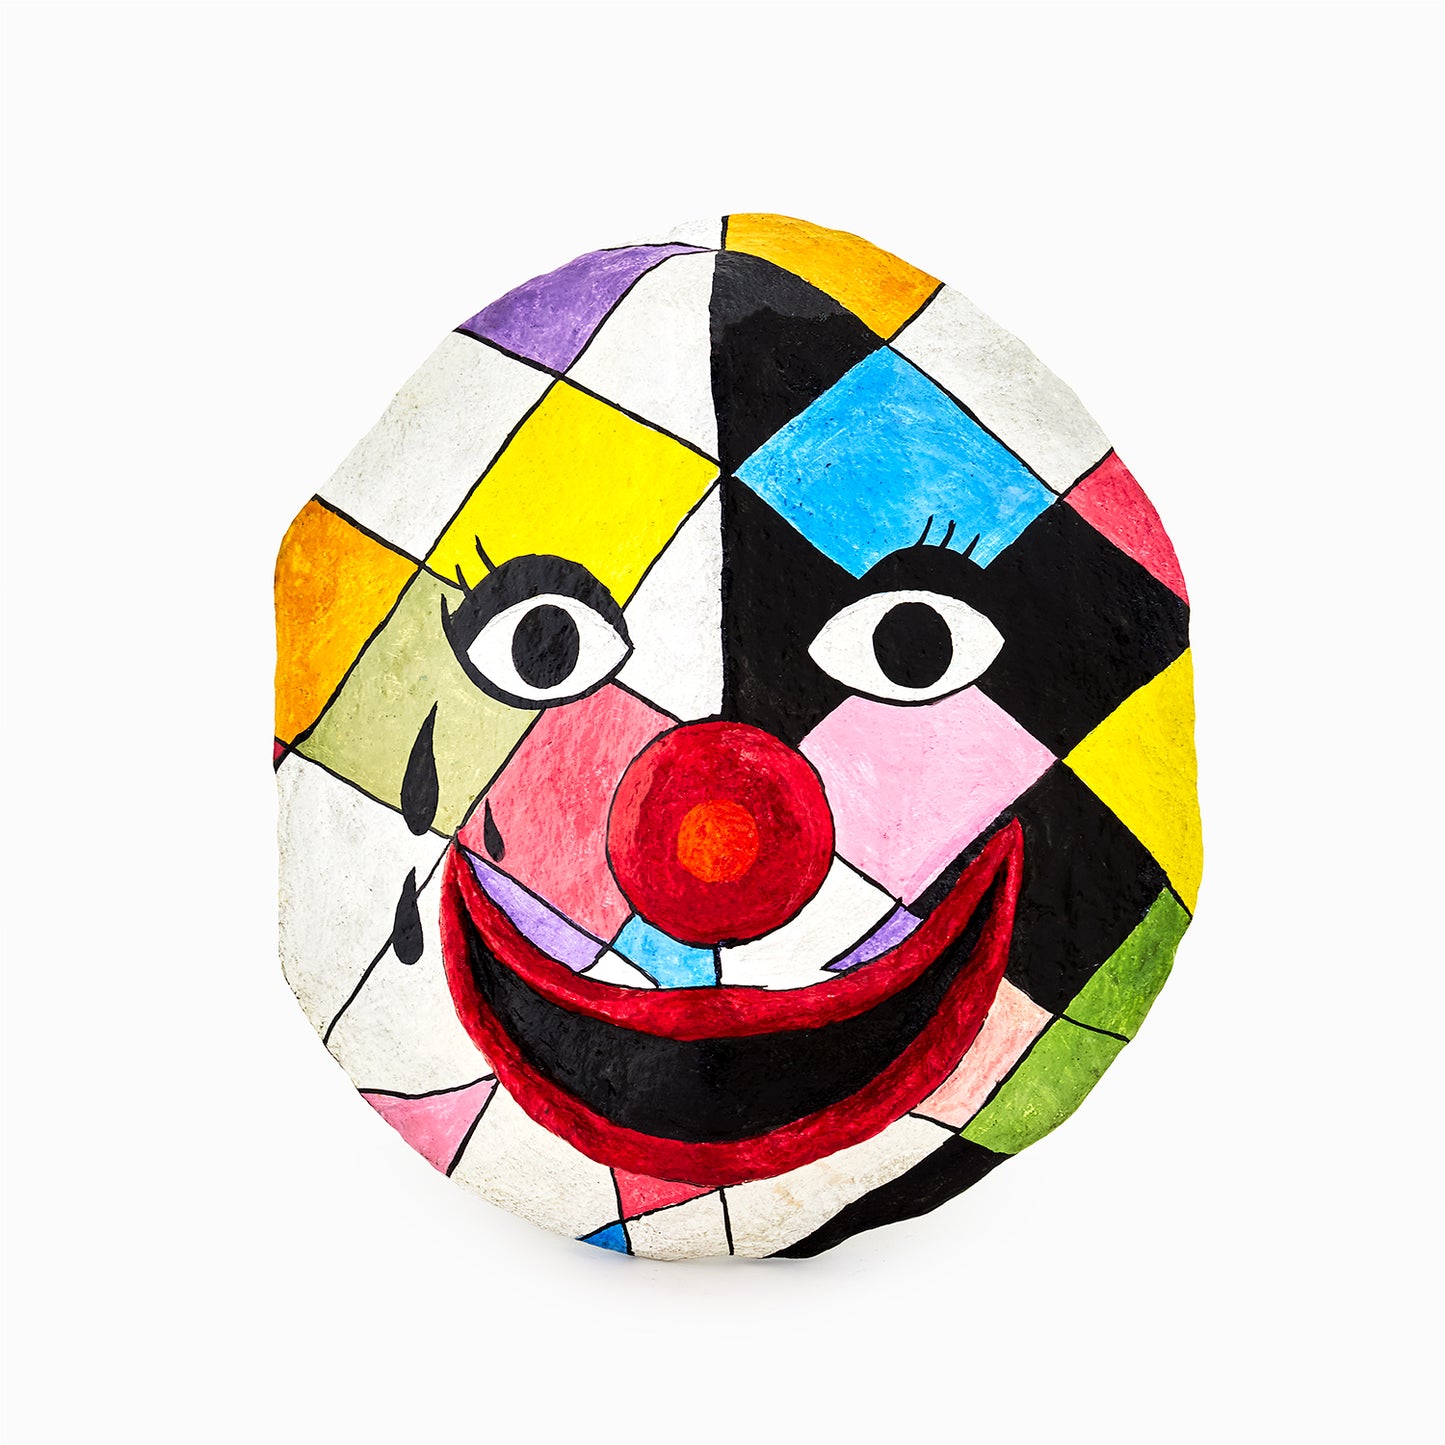 Joker - Face Mask for Wall Hanging